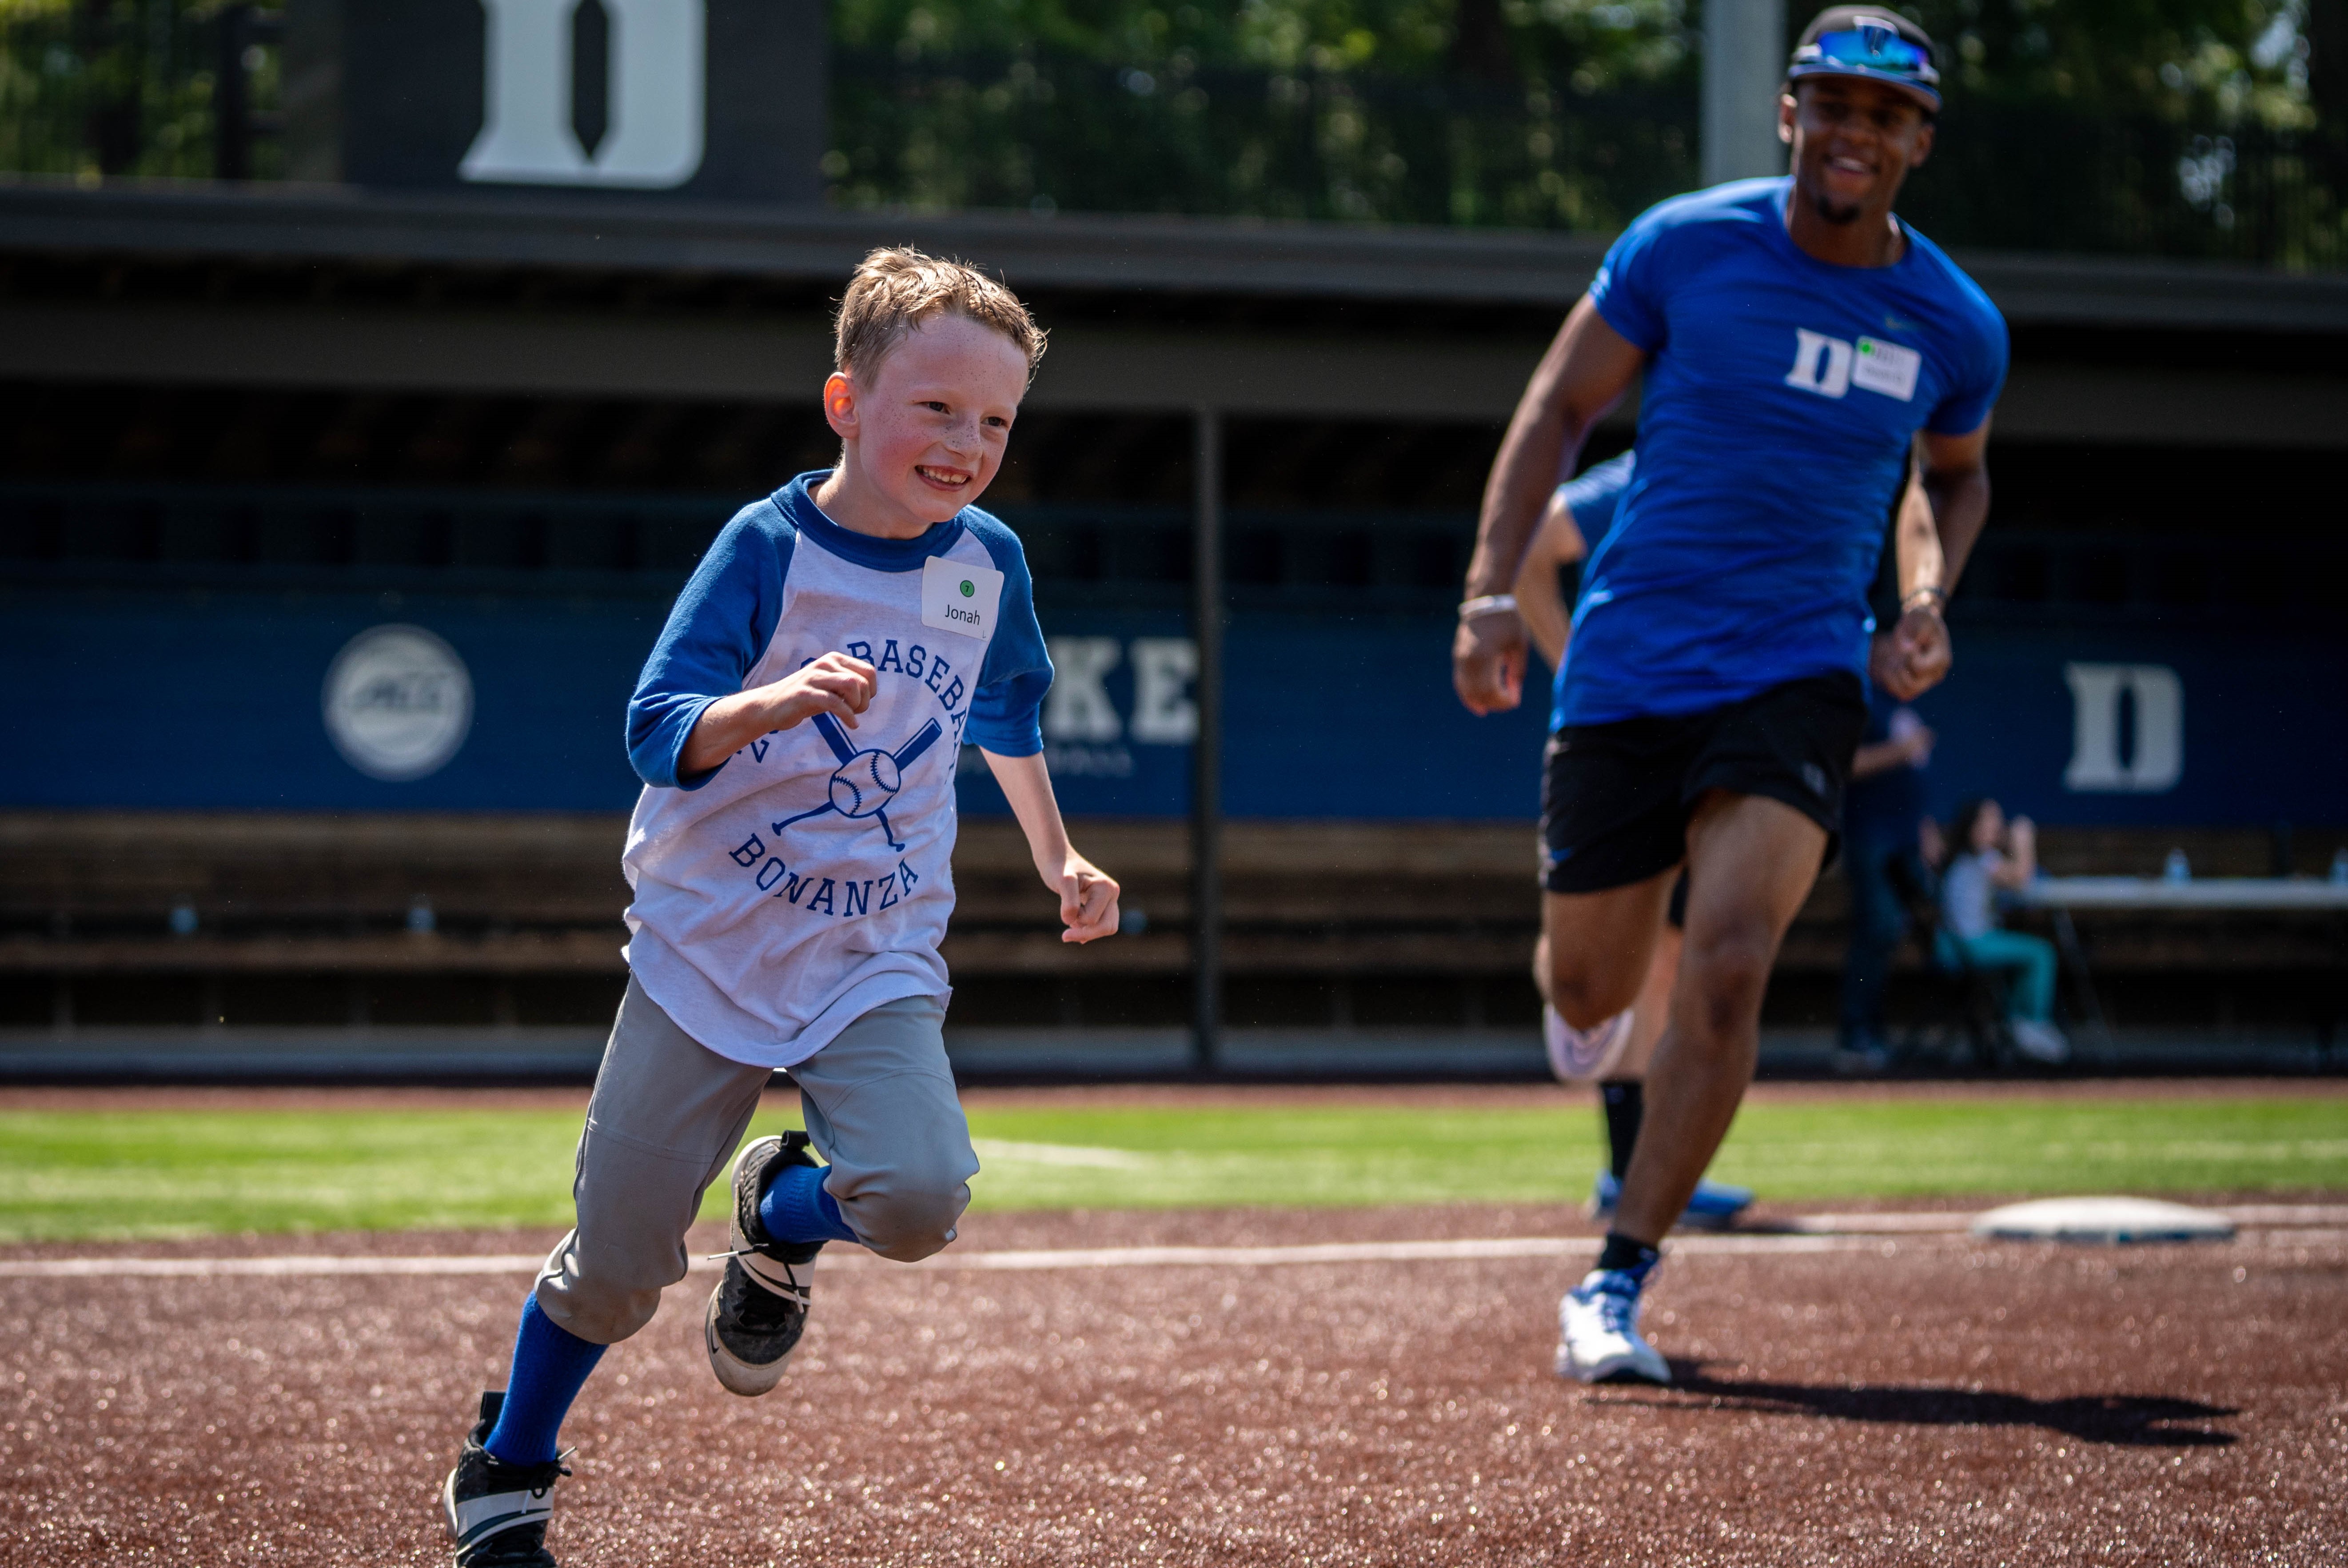 child running on baseball field